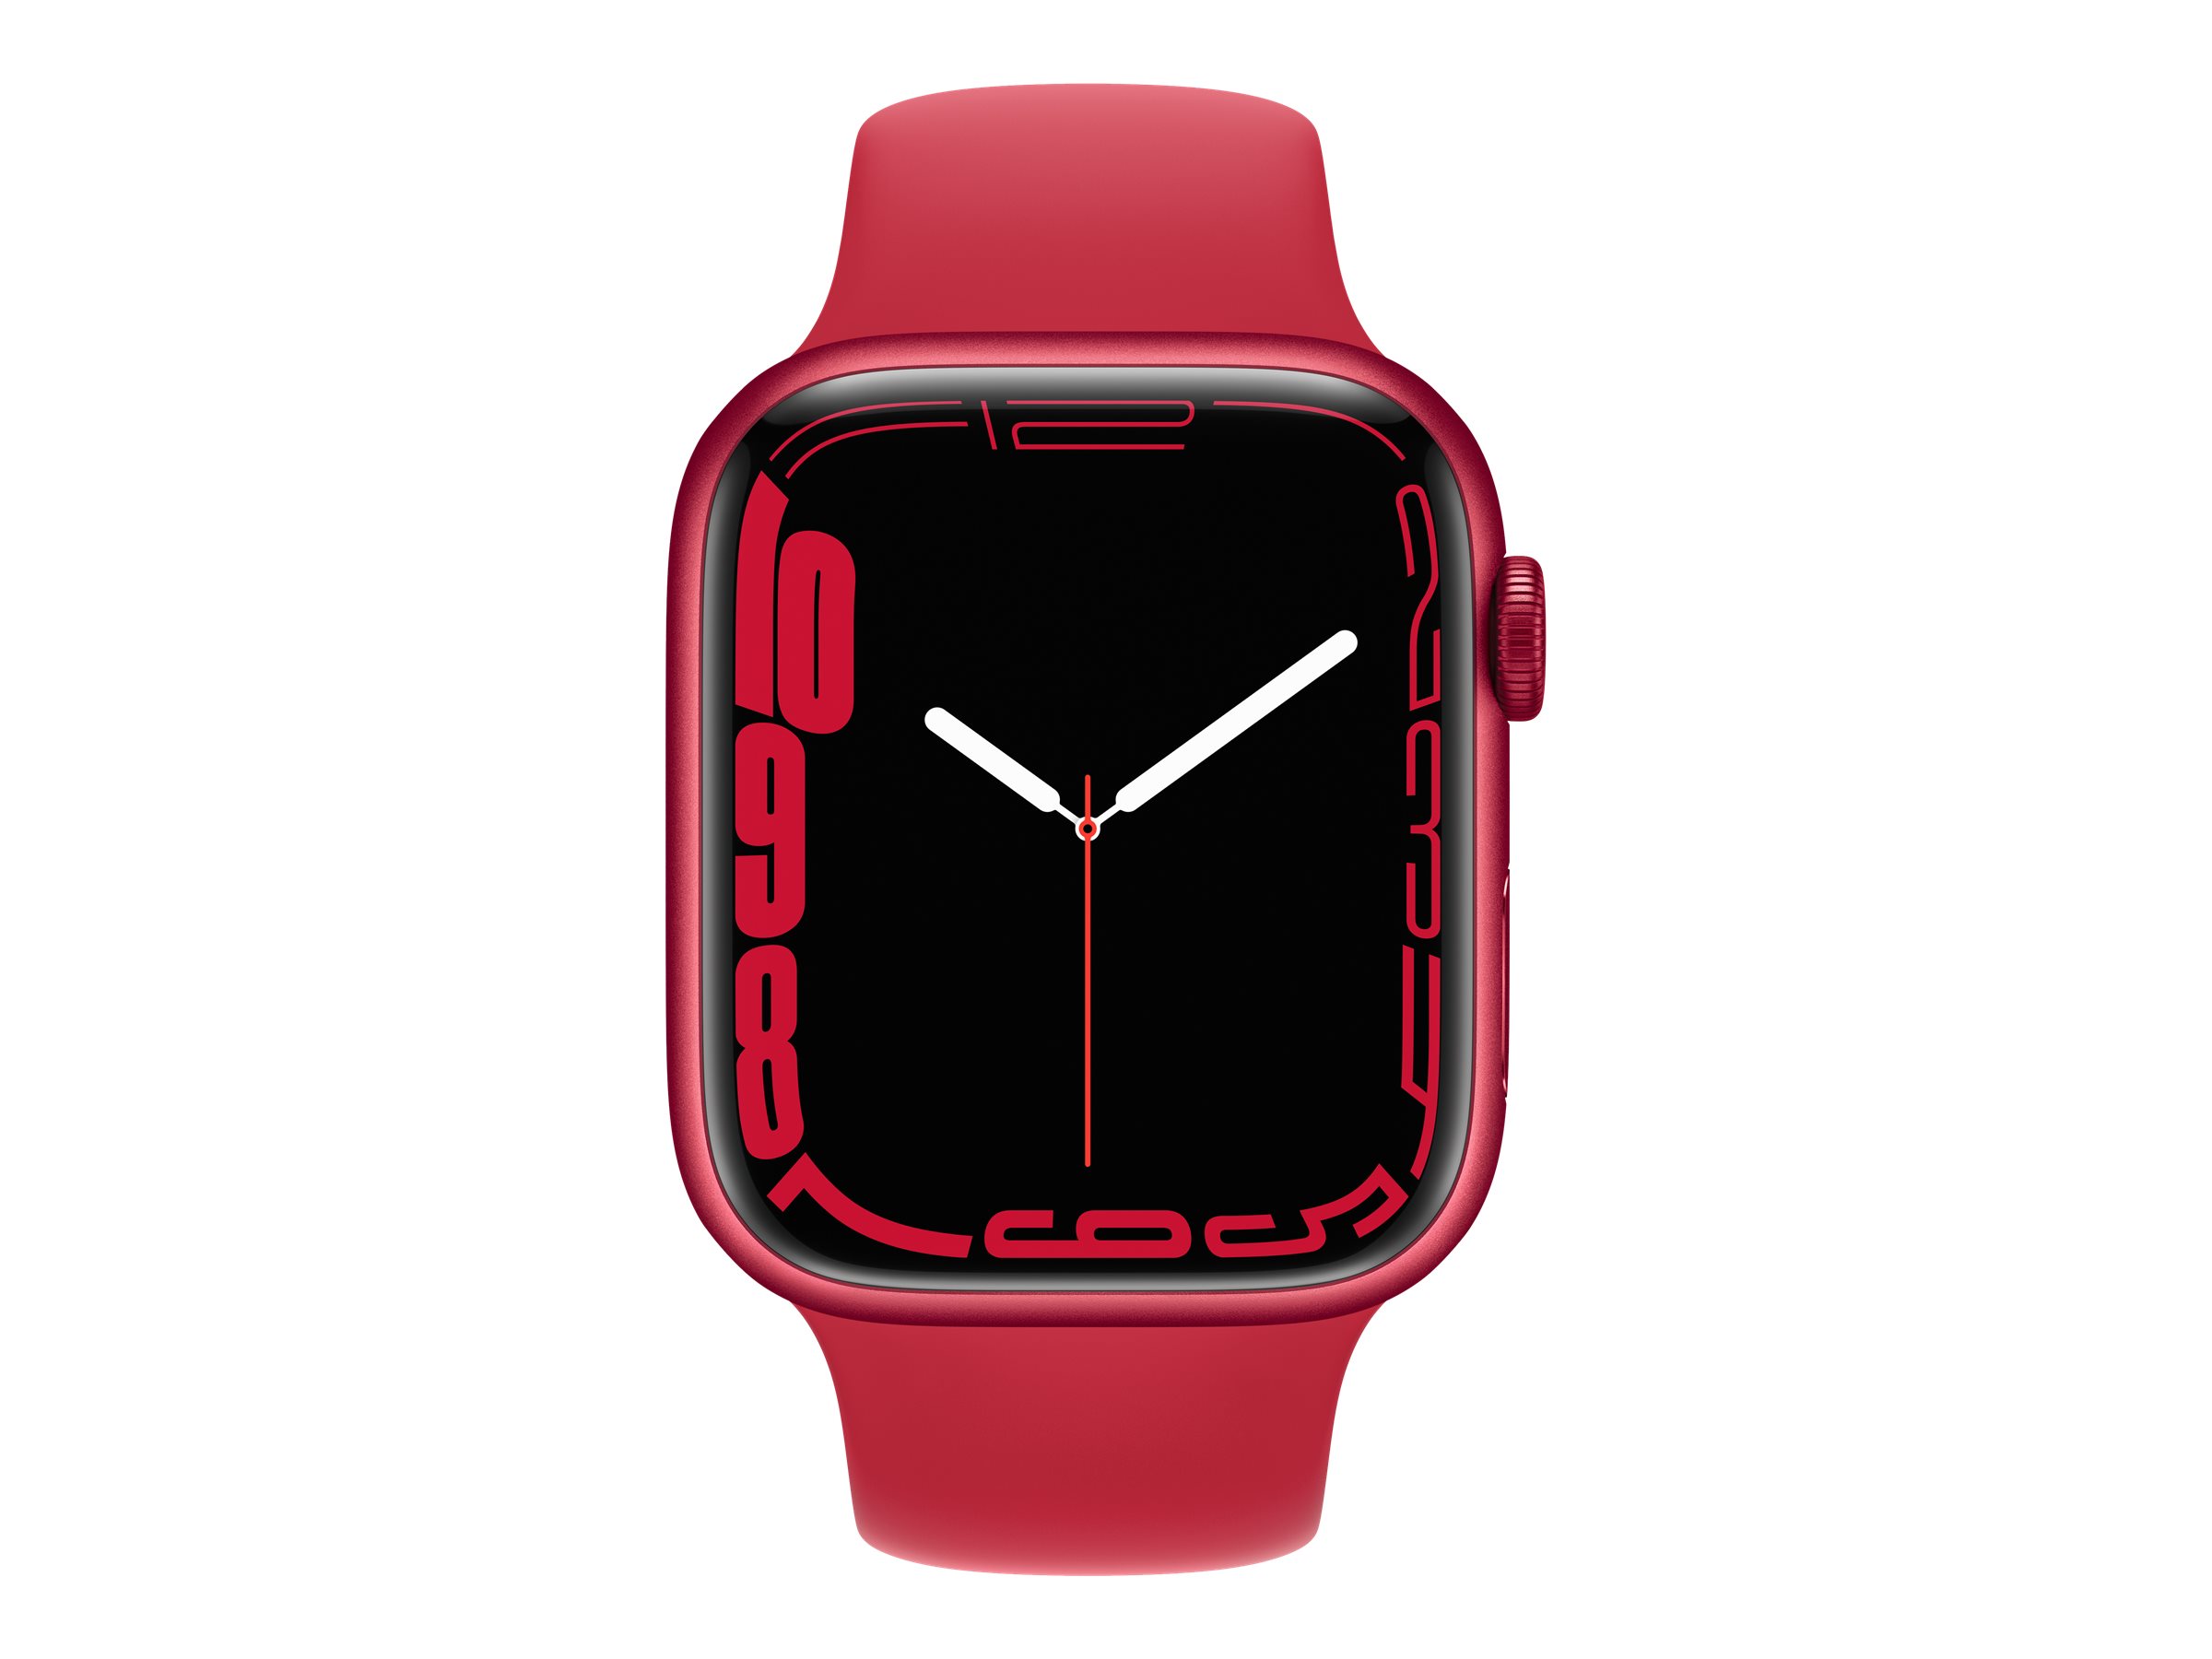 Apple Watch Series 7 (GPS + Cellular) - (PRODUCT) RED - 45 mm - aluminium rouge - montre intelligente avec bande sport - fluoroélastomère - rouge - taille du bracelet : Normal - 32 Go - Wi-Fi, Bluetooth - 4G - 38.8 g - MKJU3NF/A - Montres intelligentes